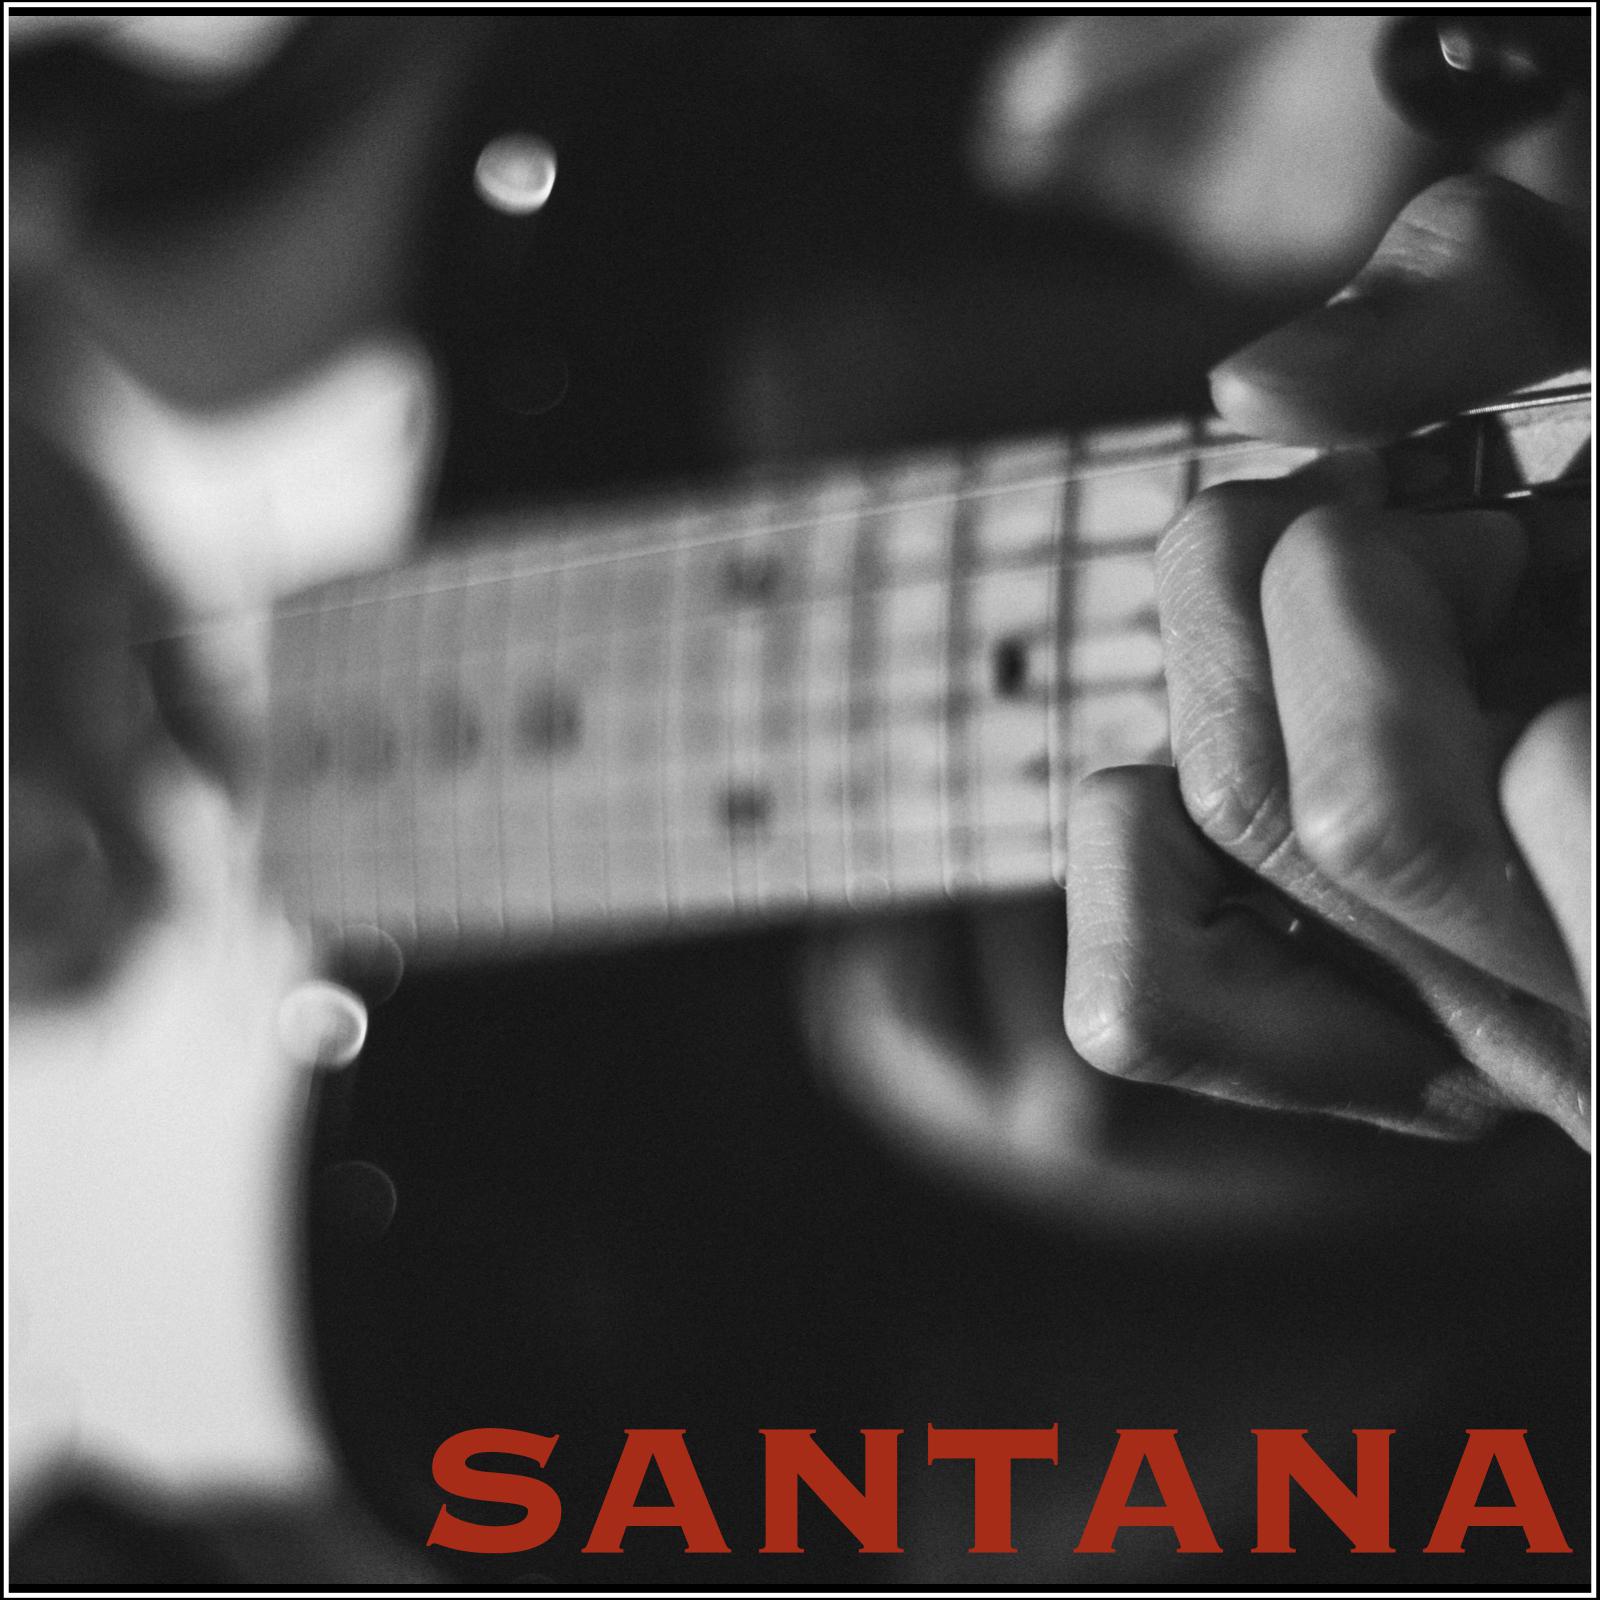 Santana - KSAN FM Broadcast Cow Palace San Francisco CA New Years Eve Show 31st December 1975 2CD.